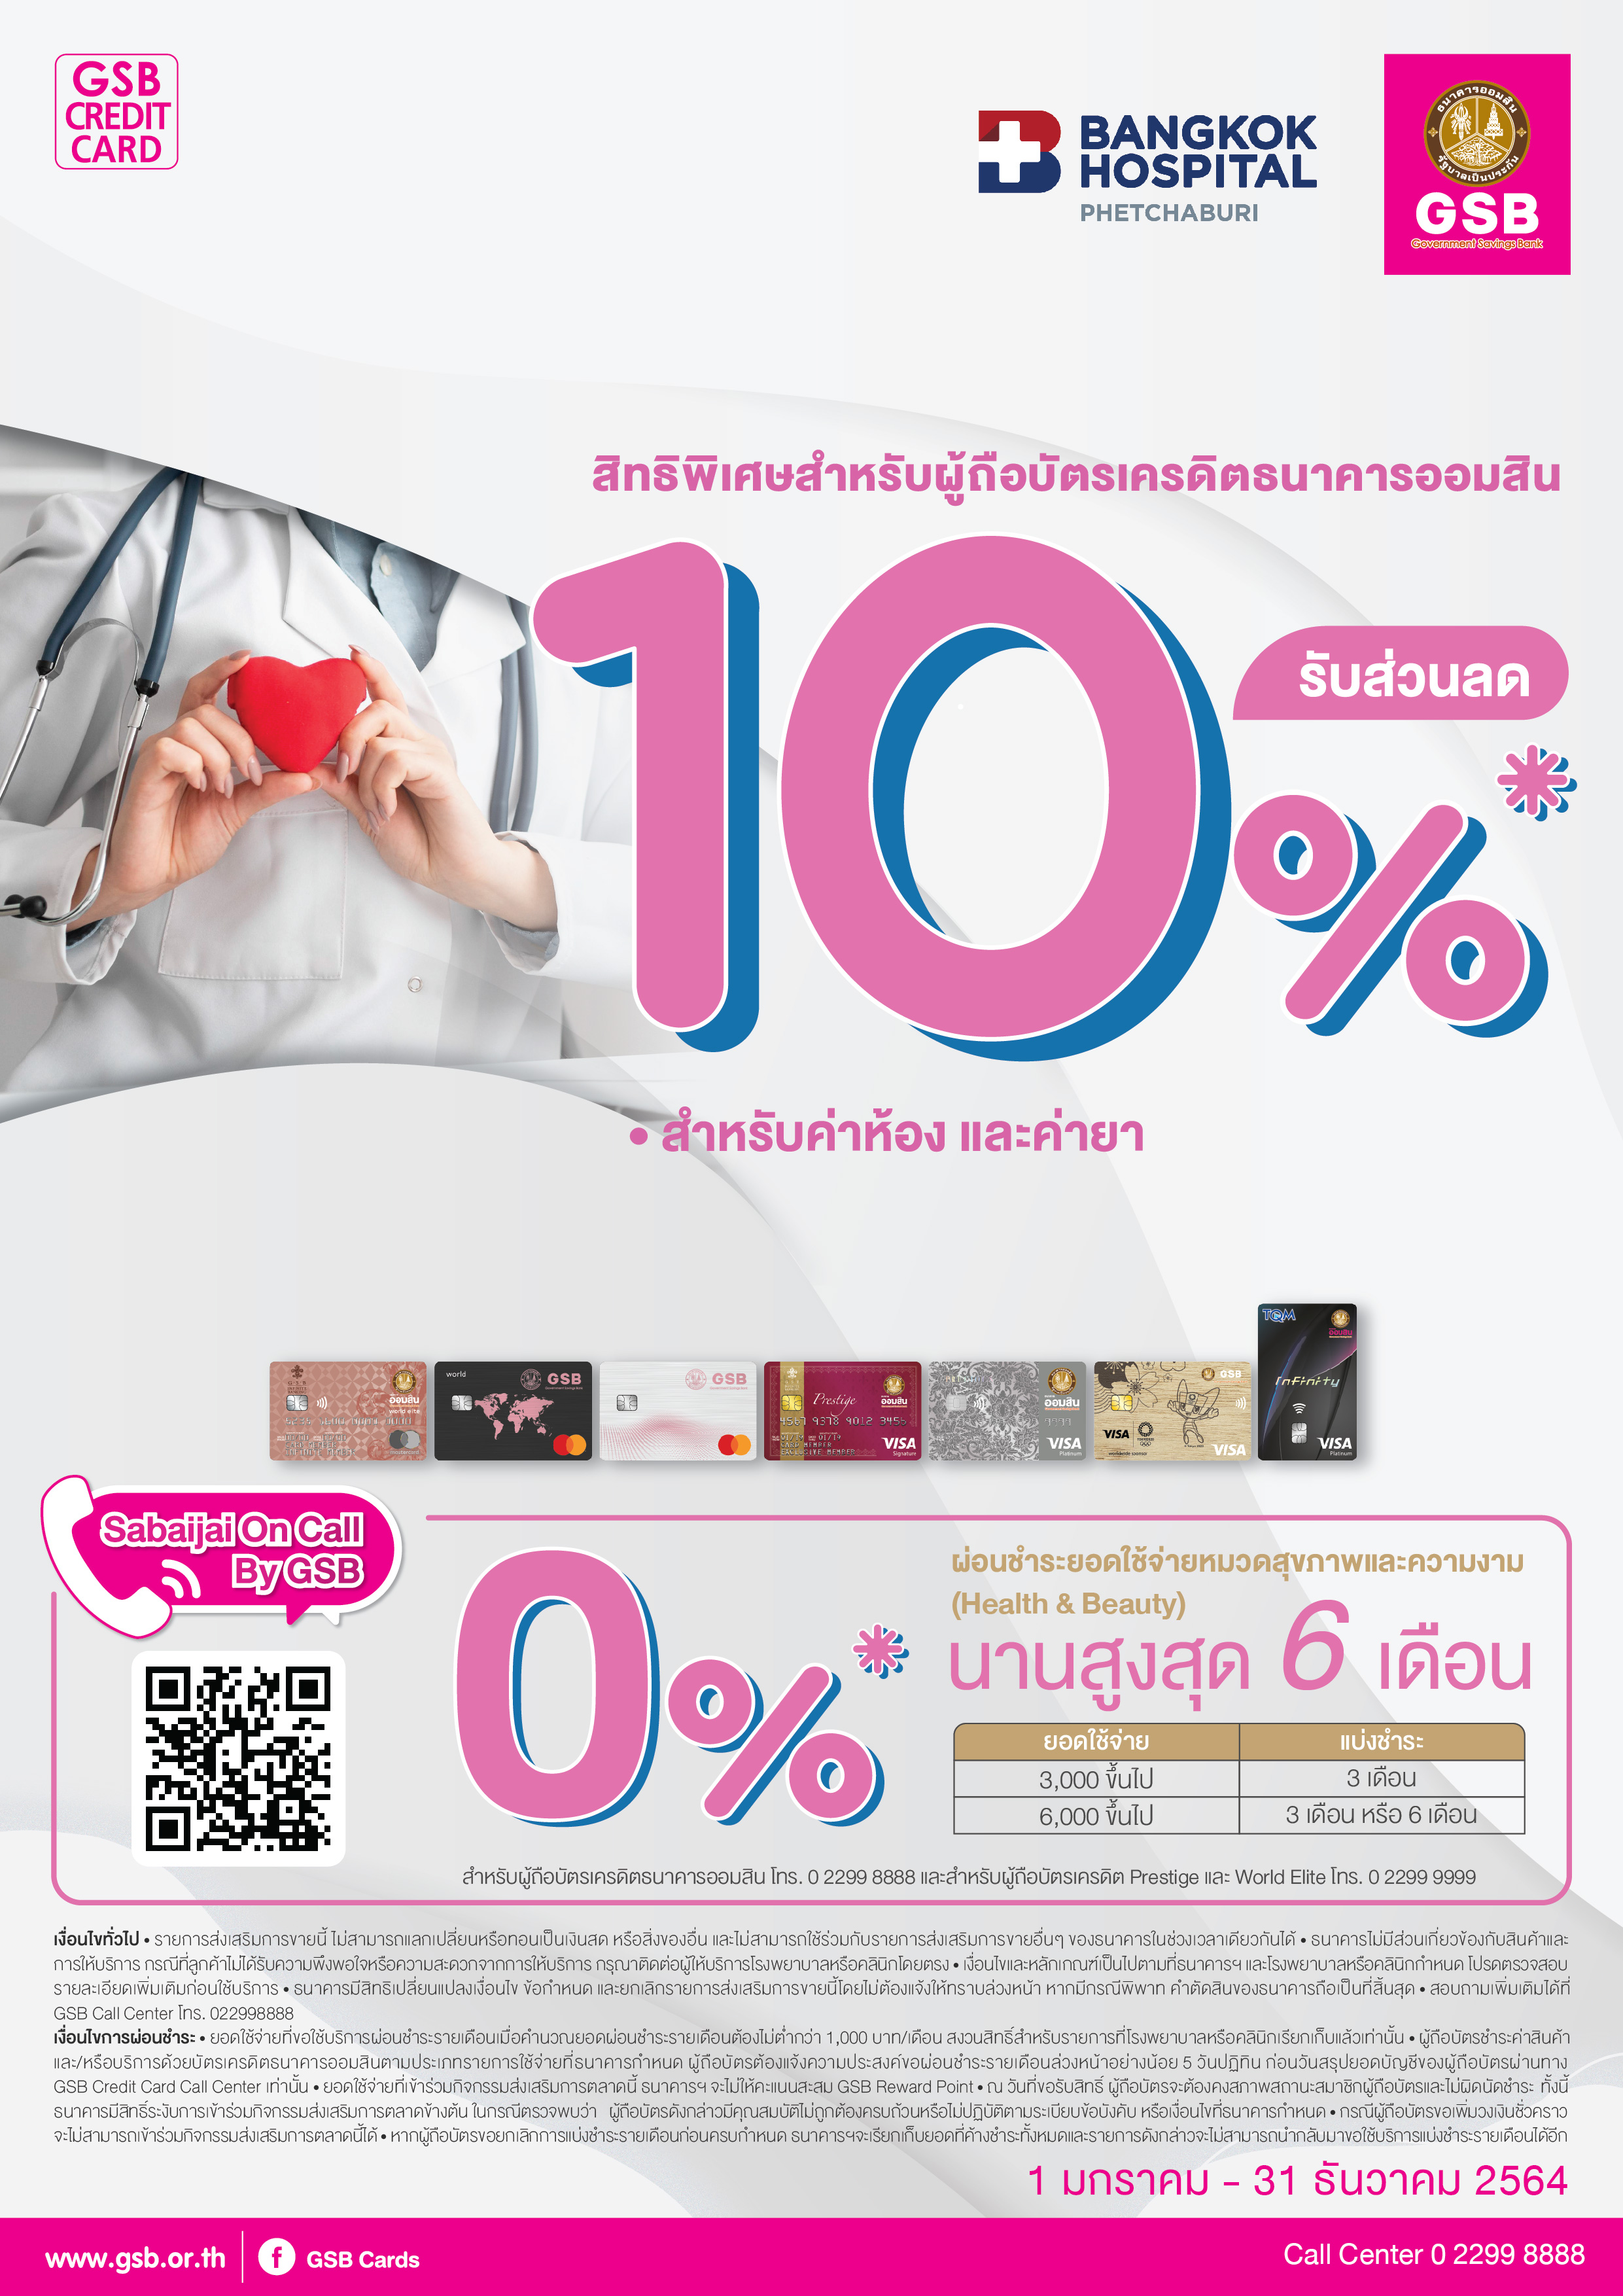 02 Gsb Hospital 2020 Bangkok Hospital Phetchaburi 01